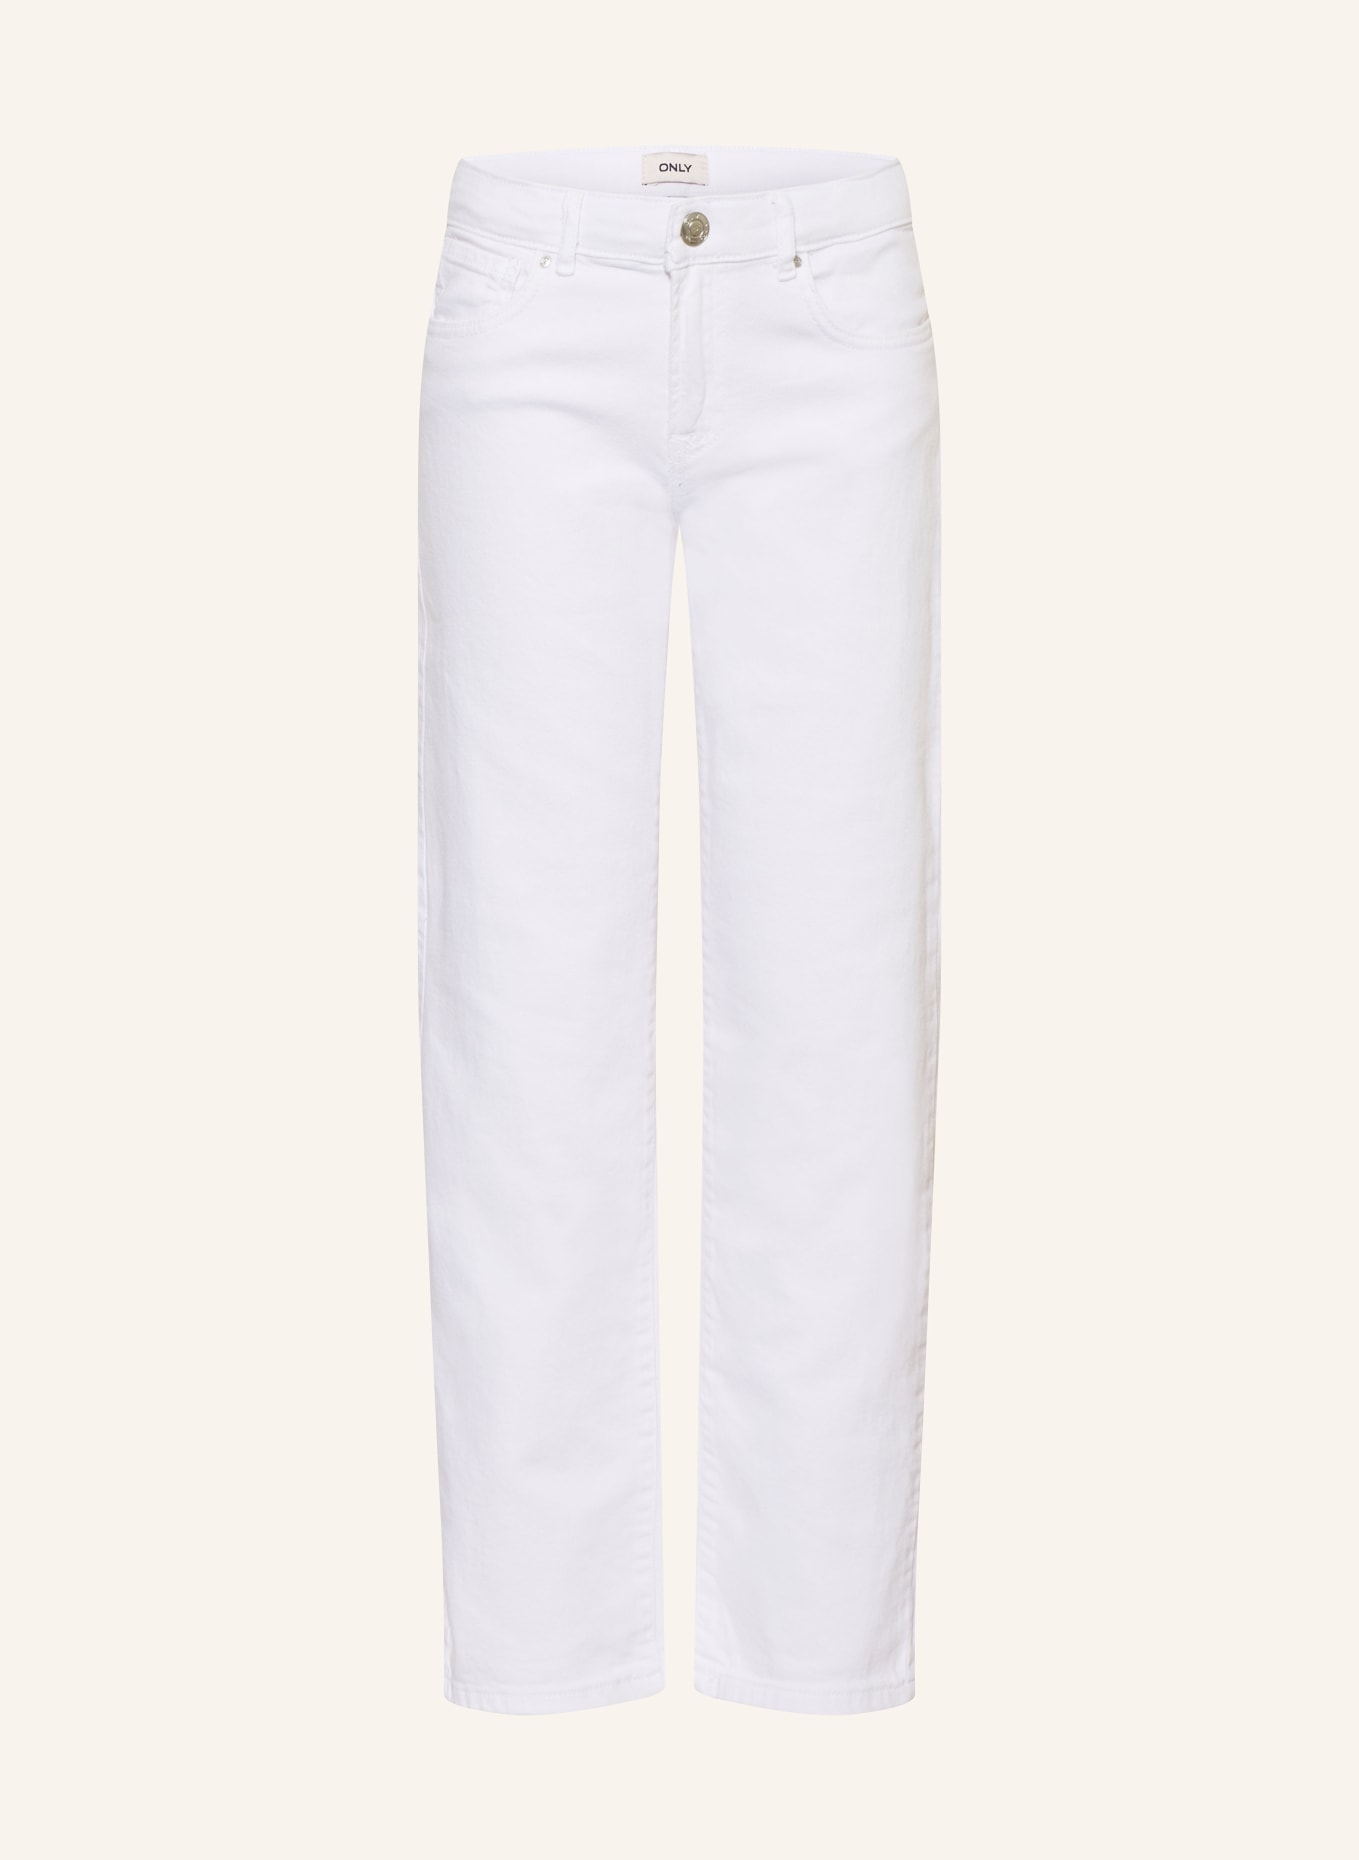 ONLY Jeans, Farbe: WHITE (Bild 1)